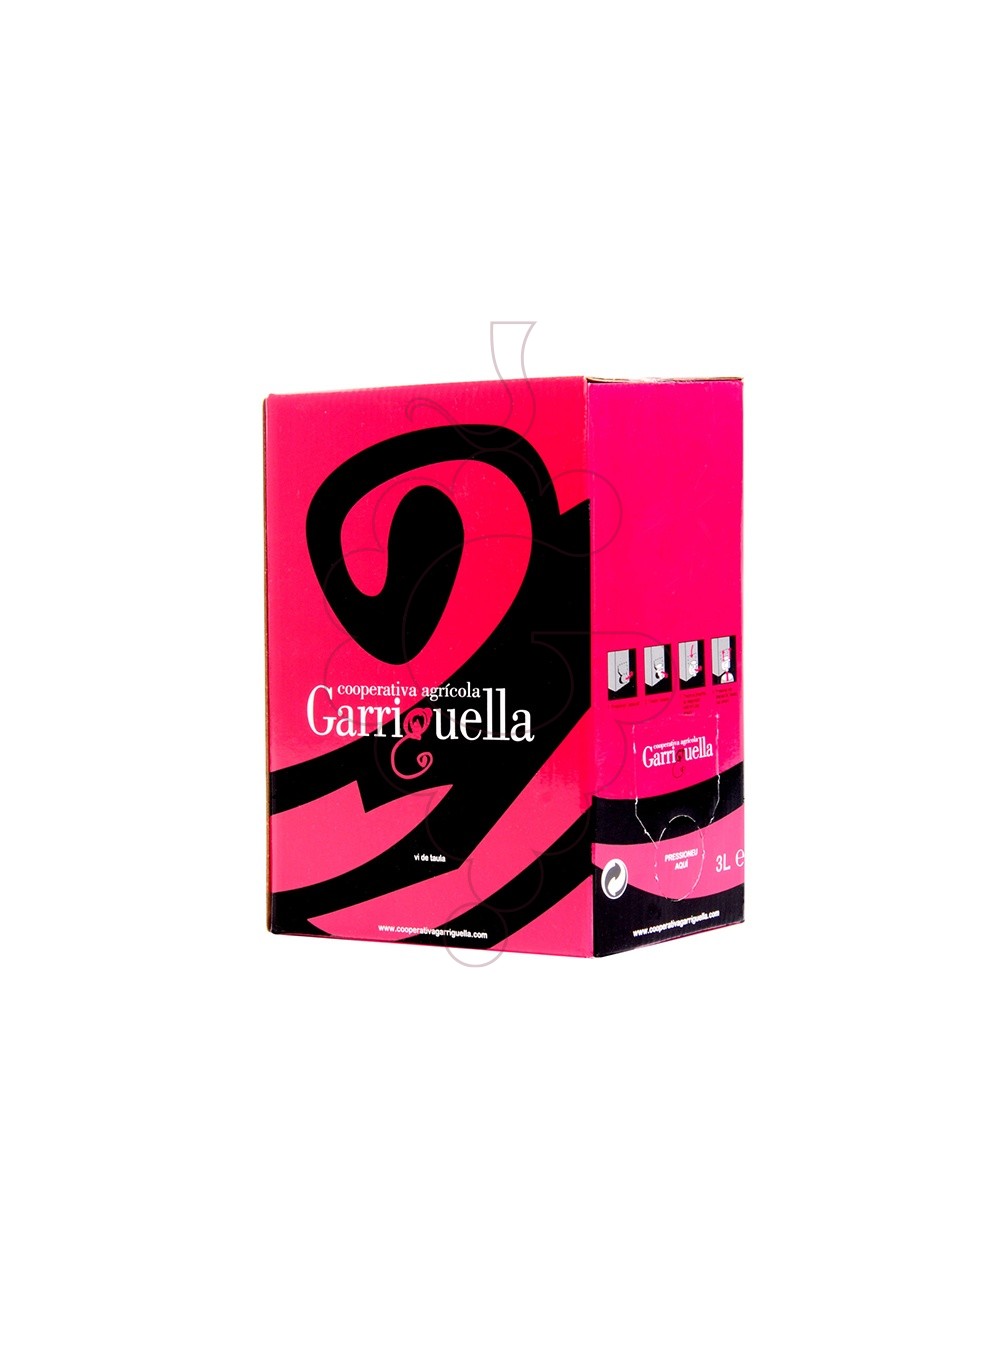 Foto Garriguella Rosat Box vino rosado